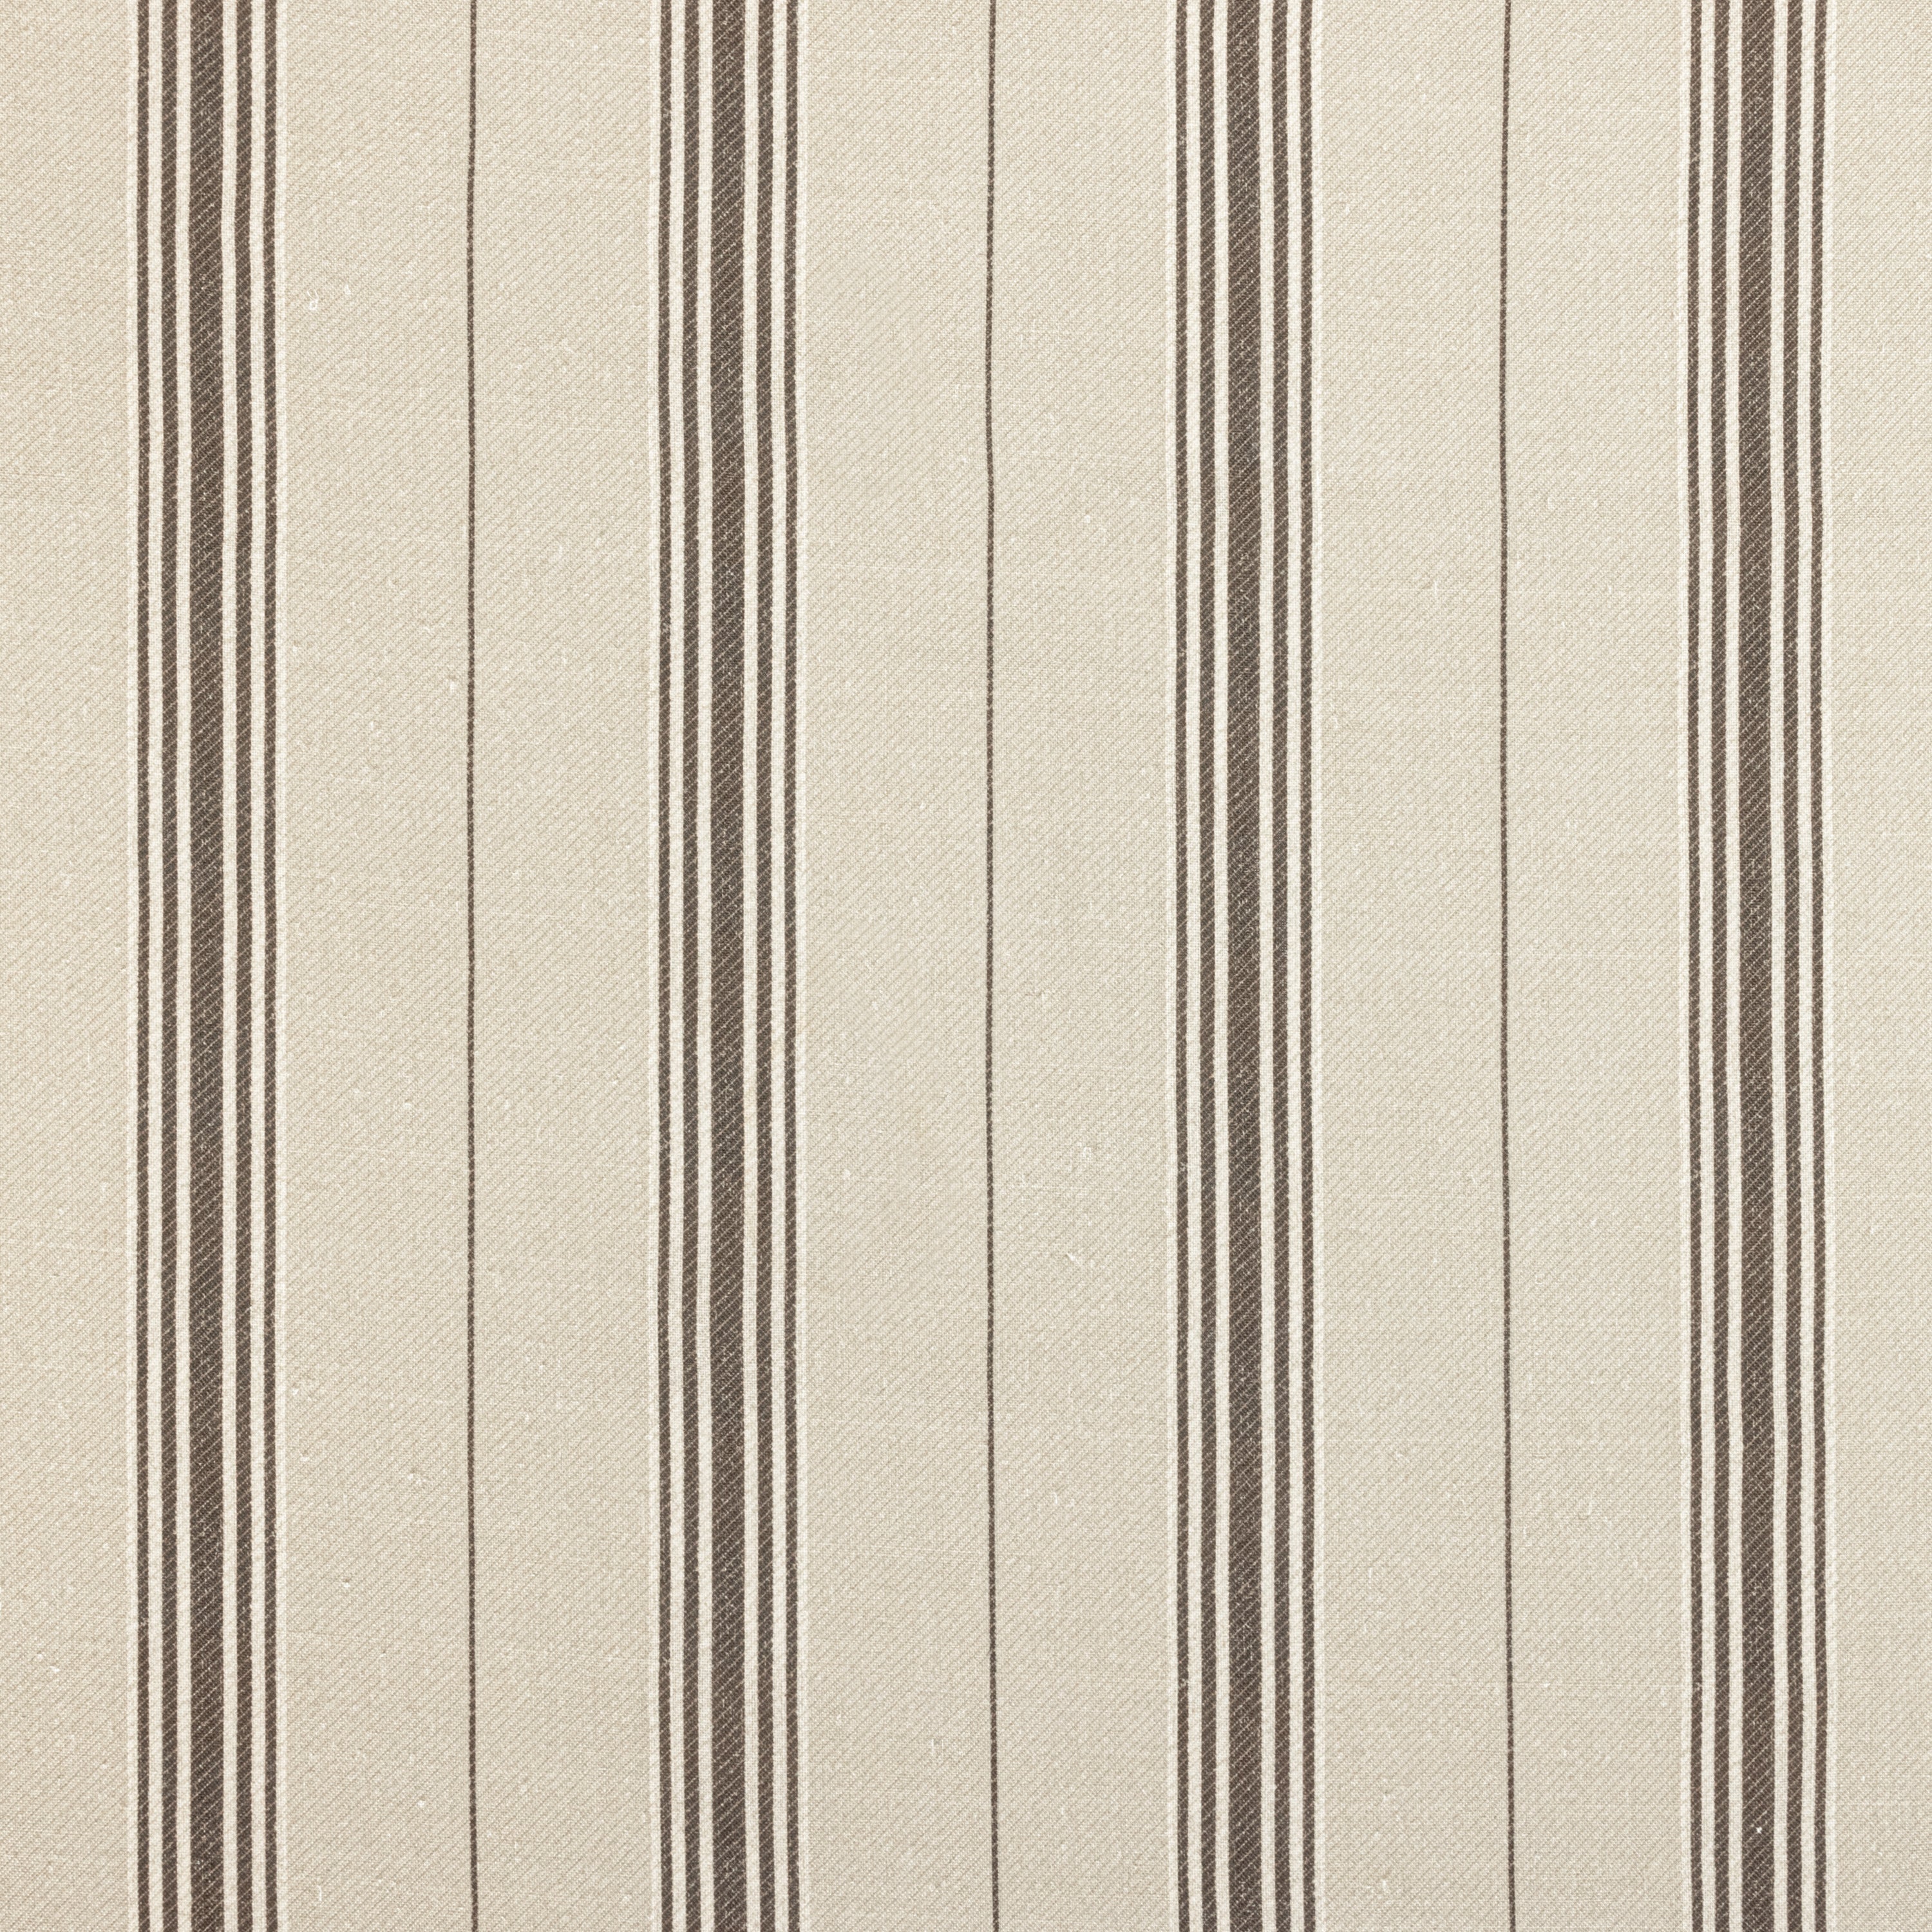 Vallon Stripe Linen / Chocolate